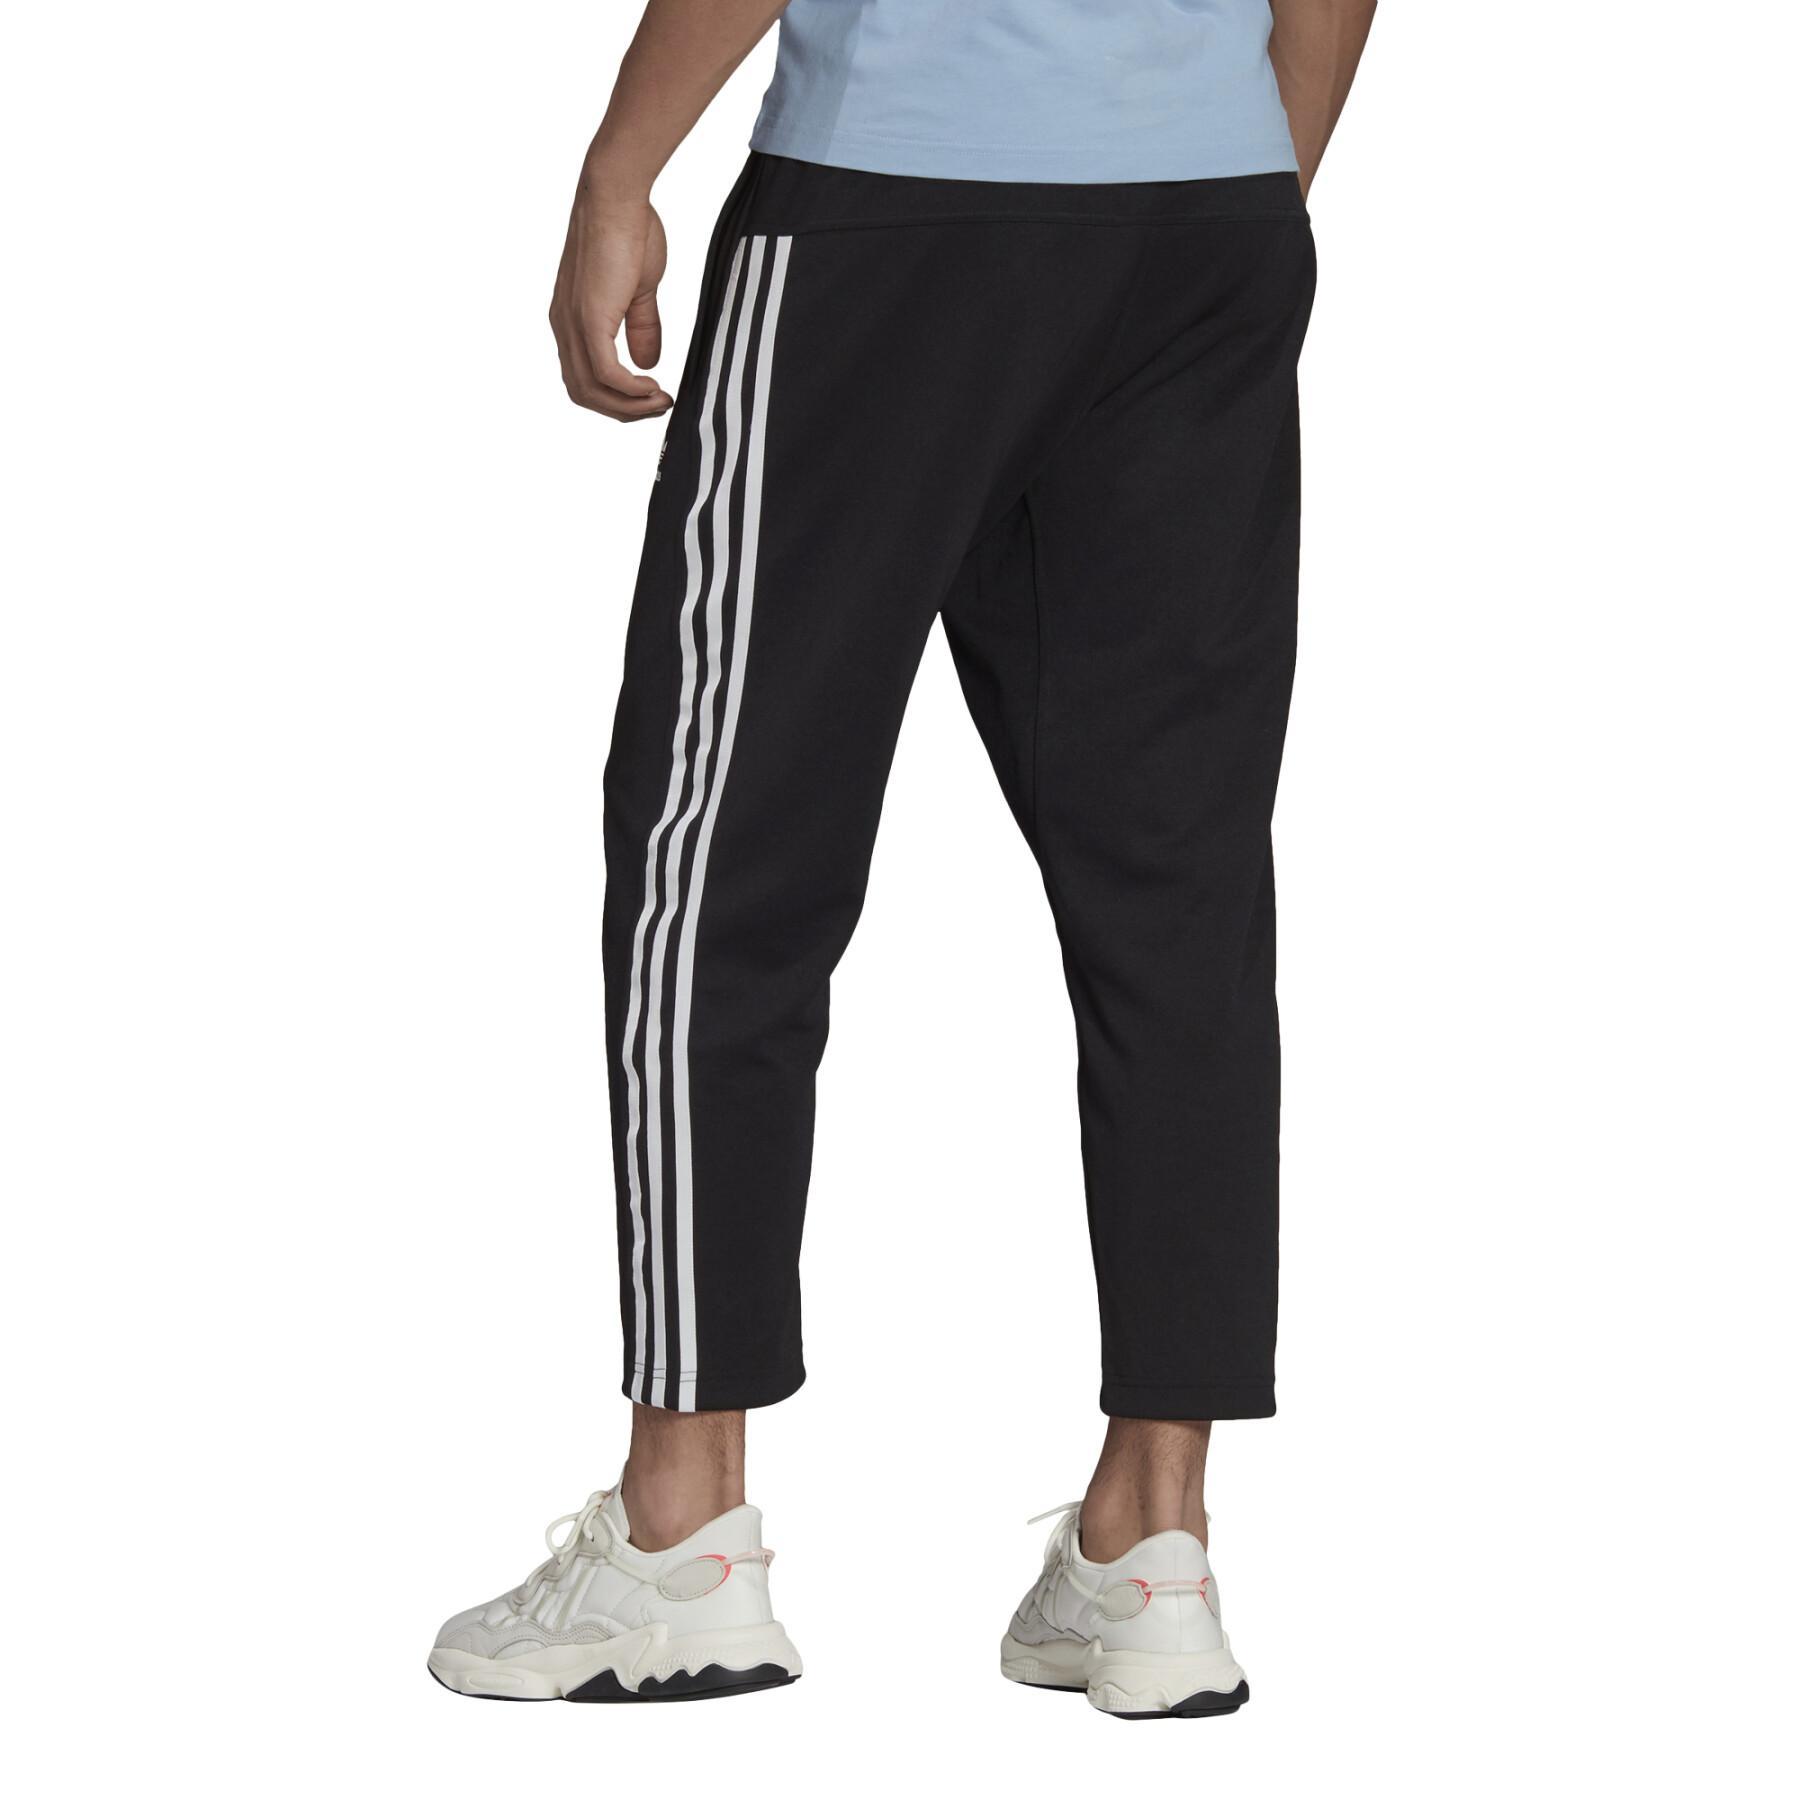 Pantalon de survêtement adidas Originals Adicolor 3-Stripes 7/8